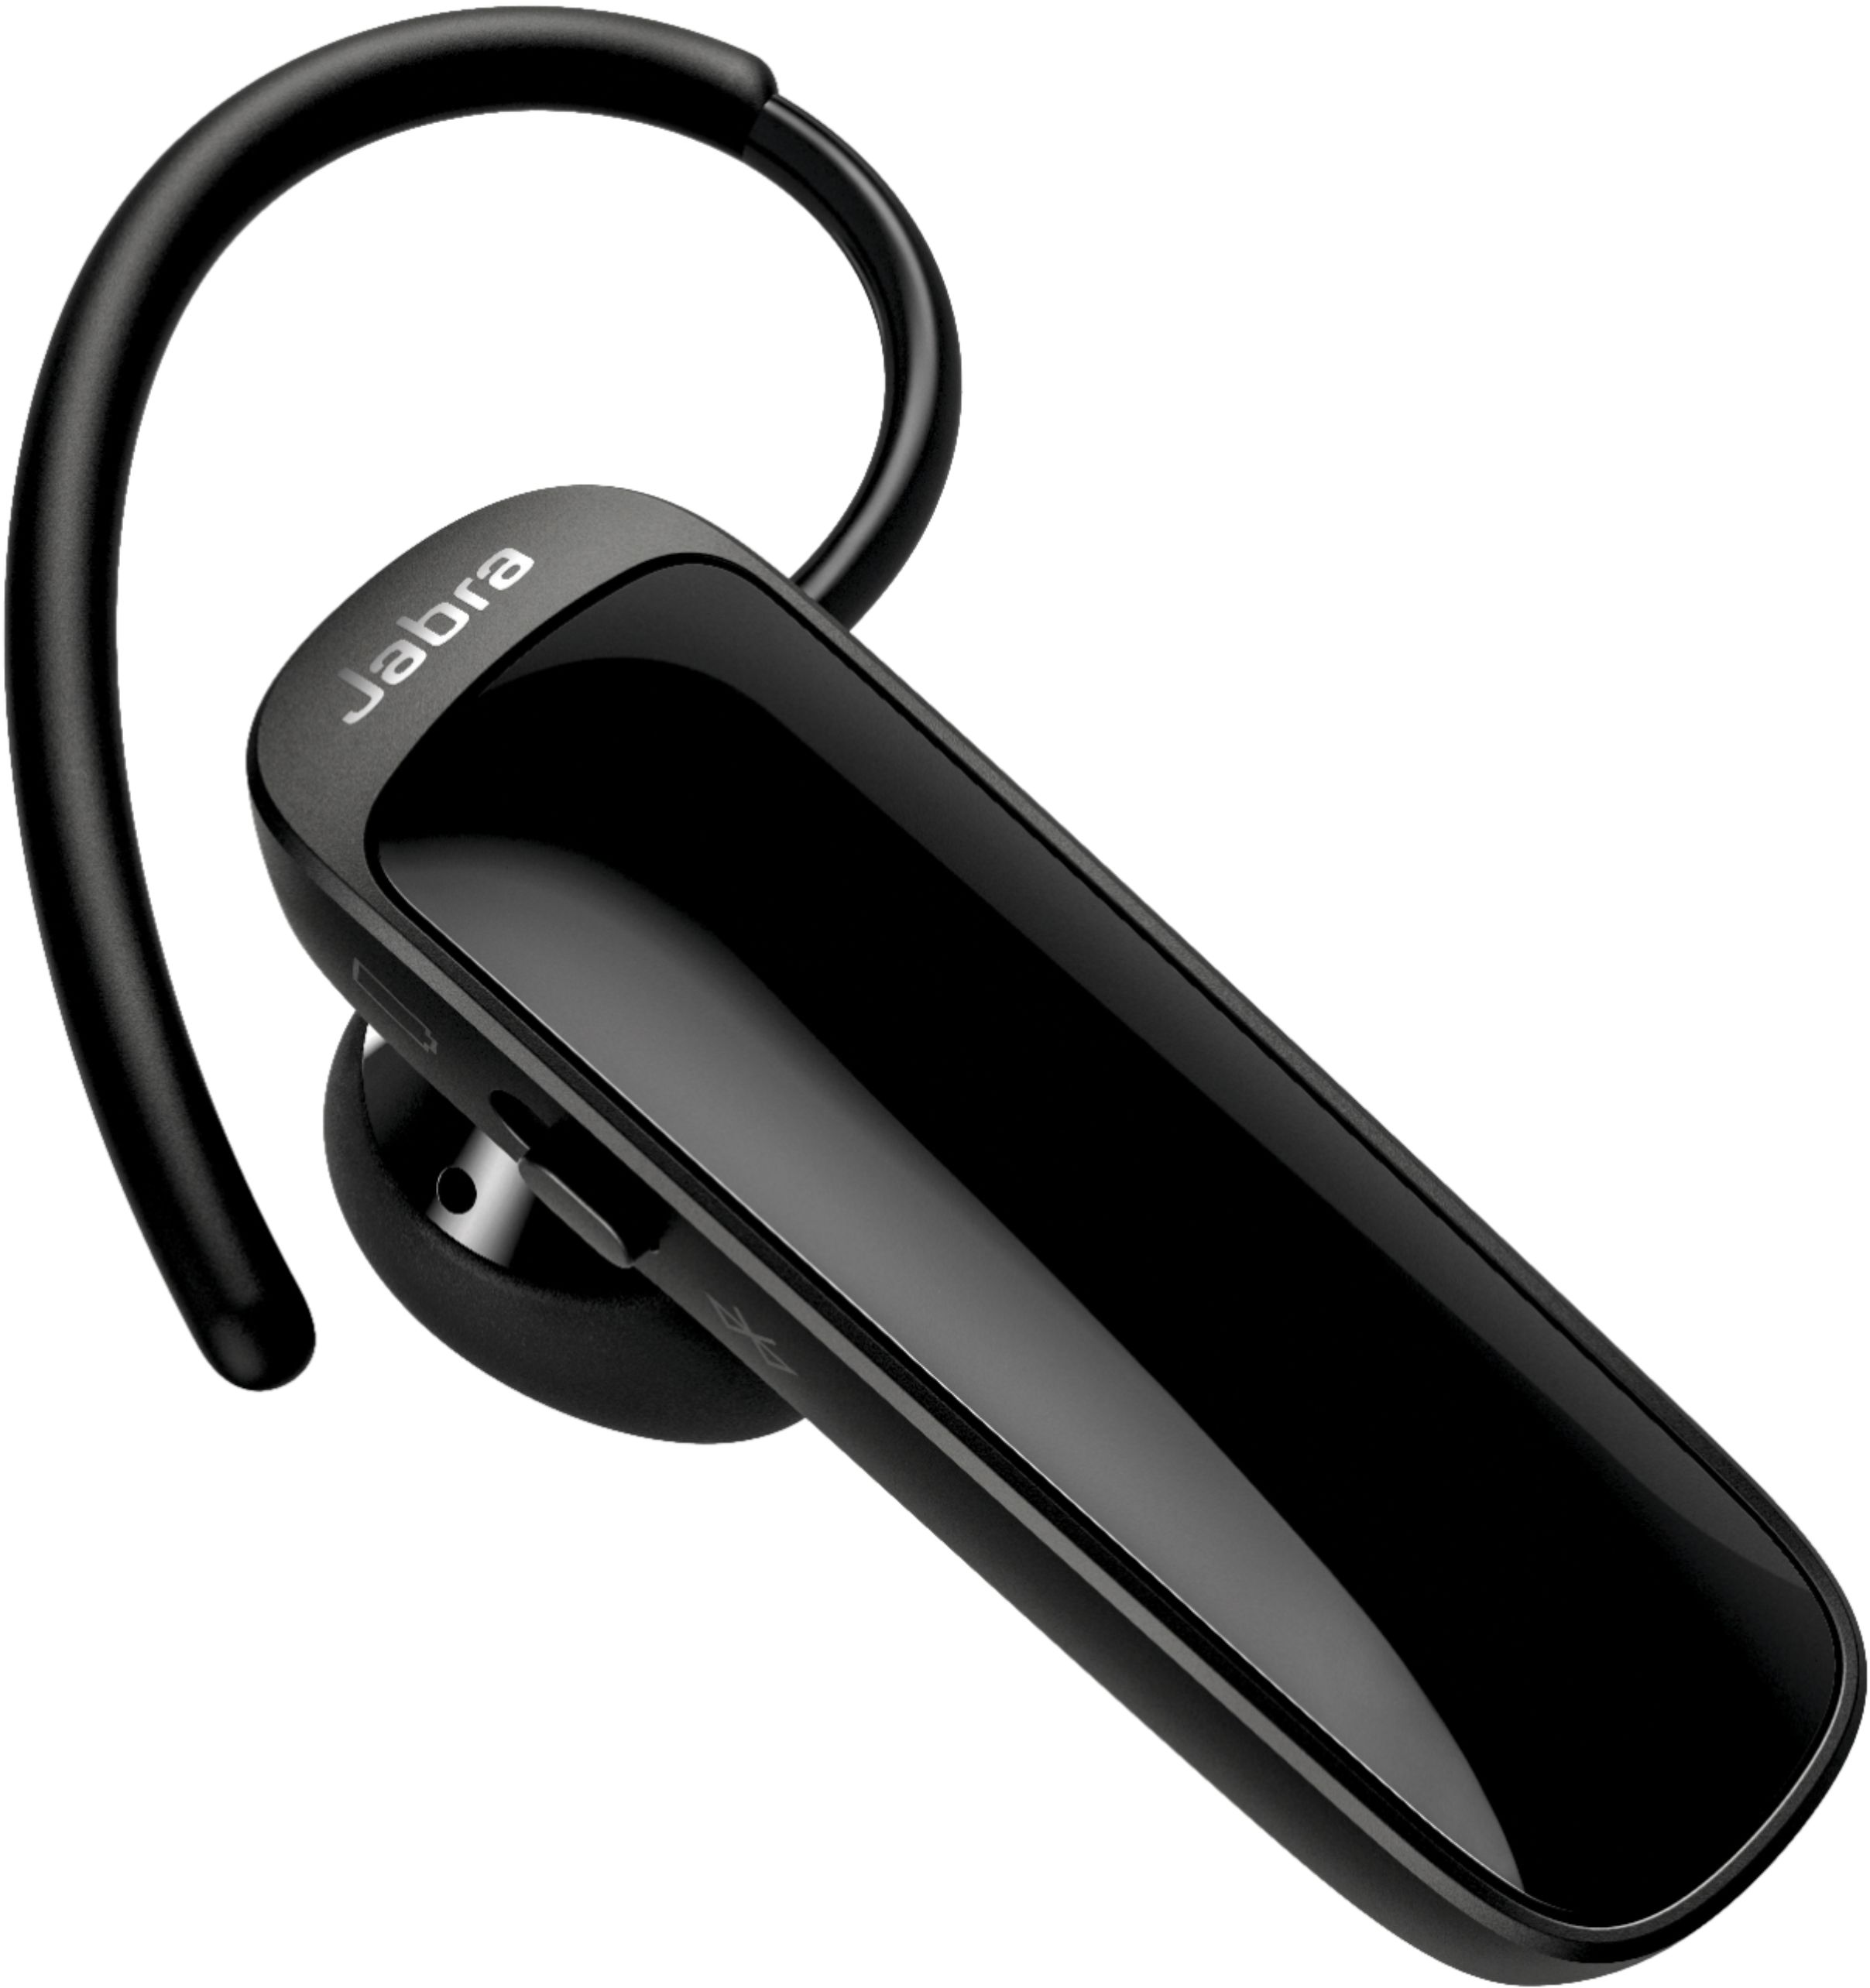 Jabra Talk 25 Bluetooth Headset Black 615822010870 eBay